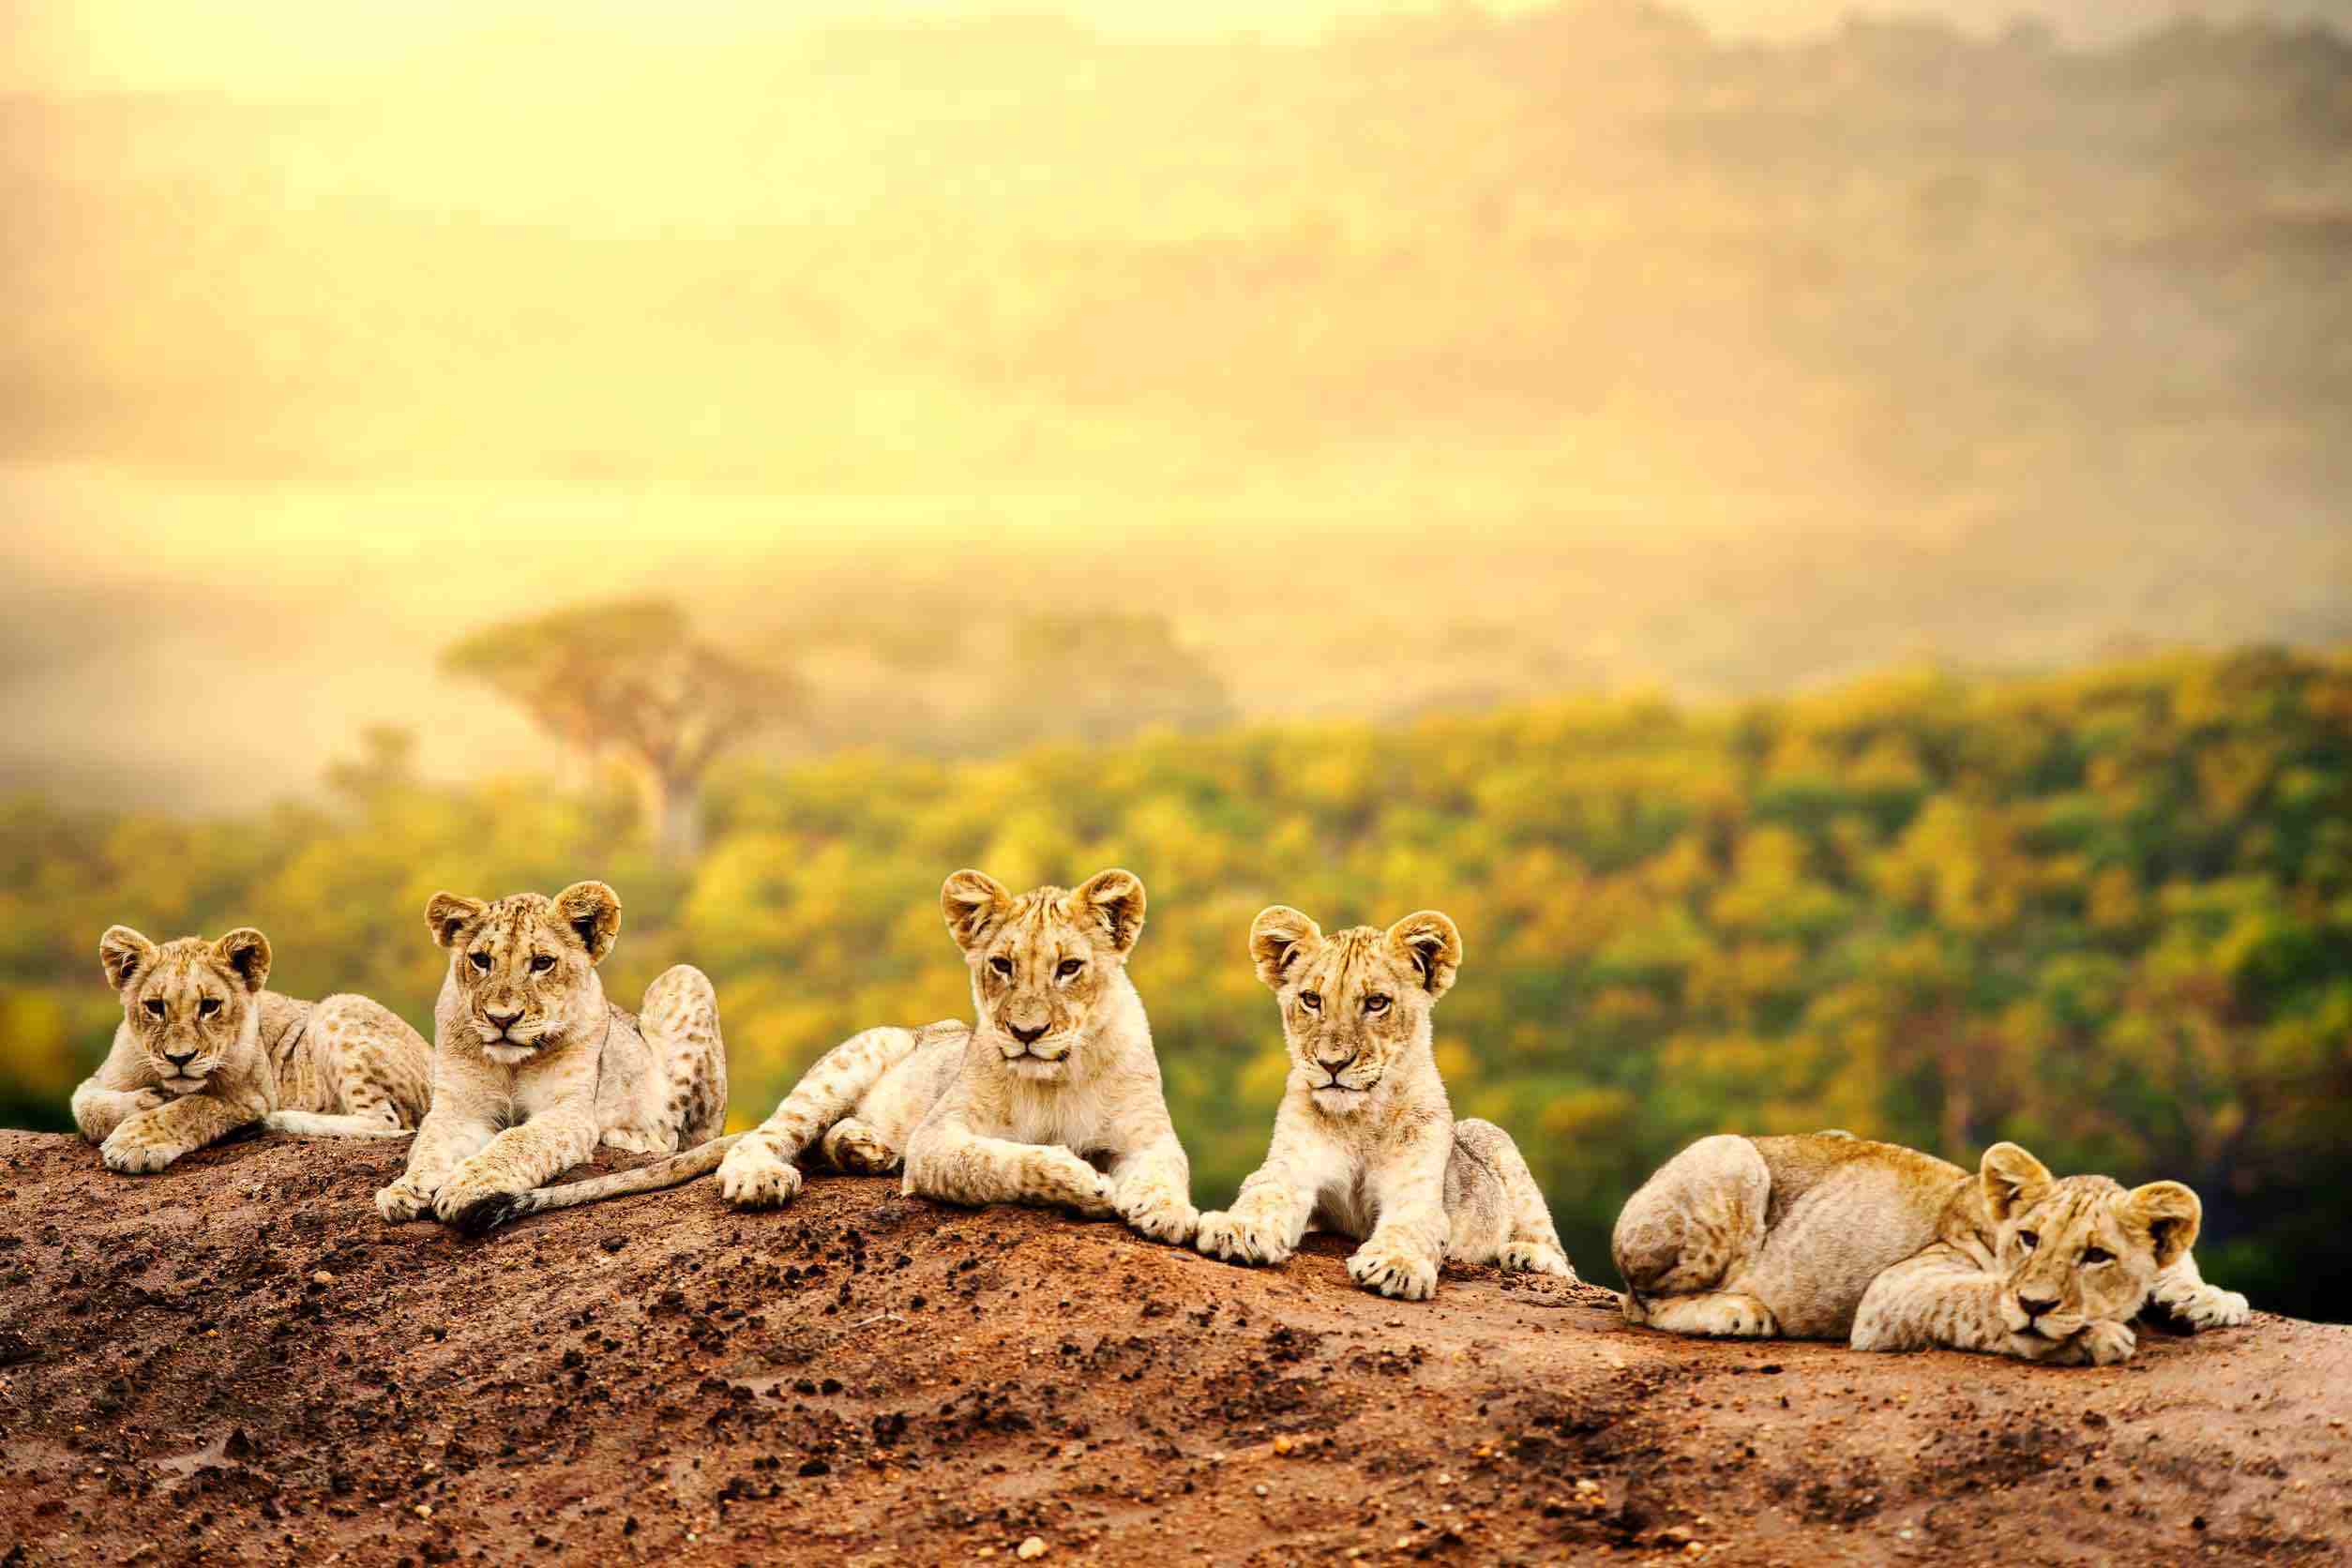 Africa Safari – Choosing The Right One